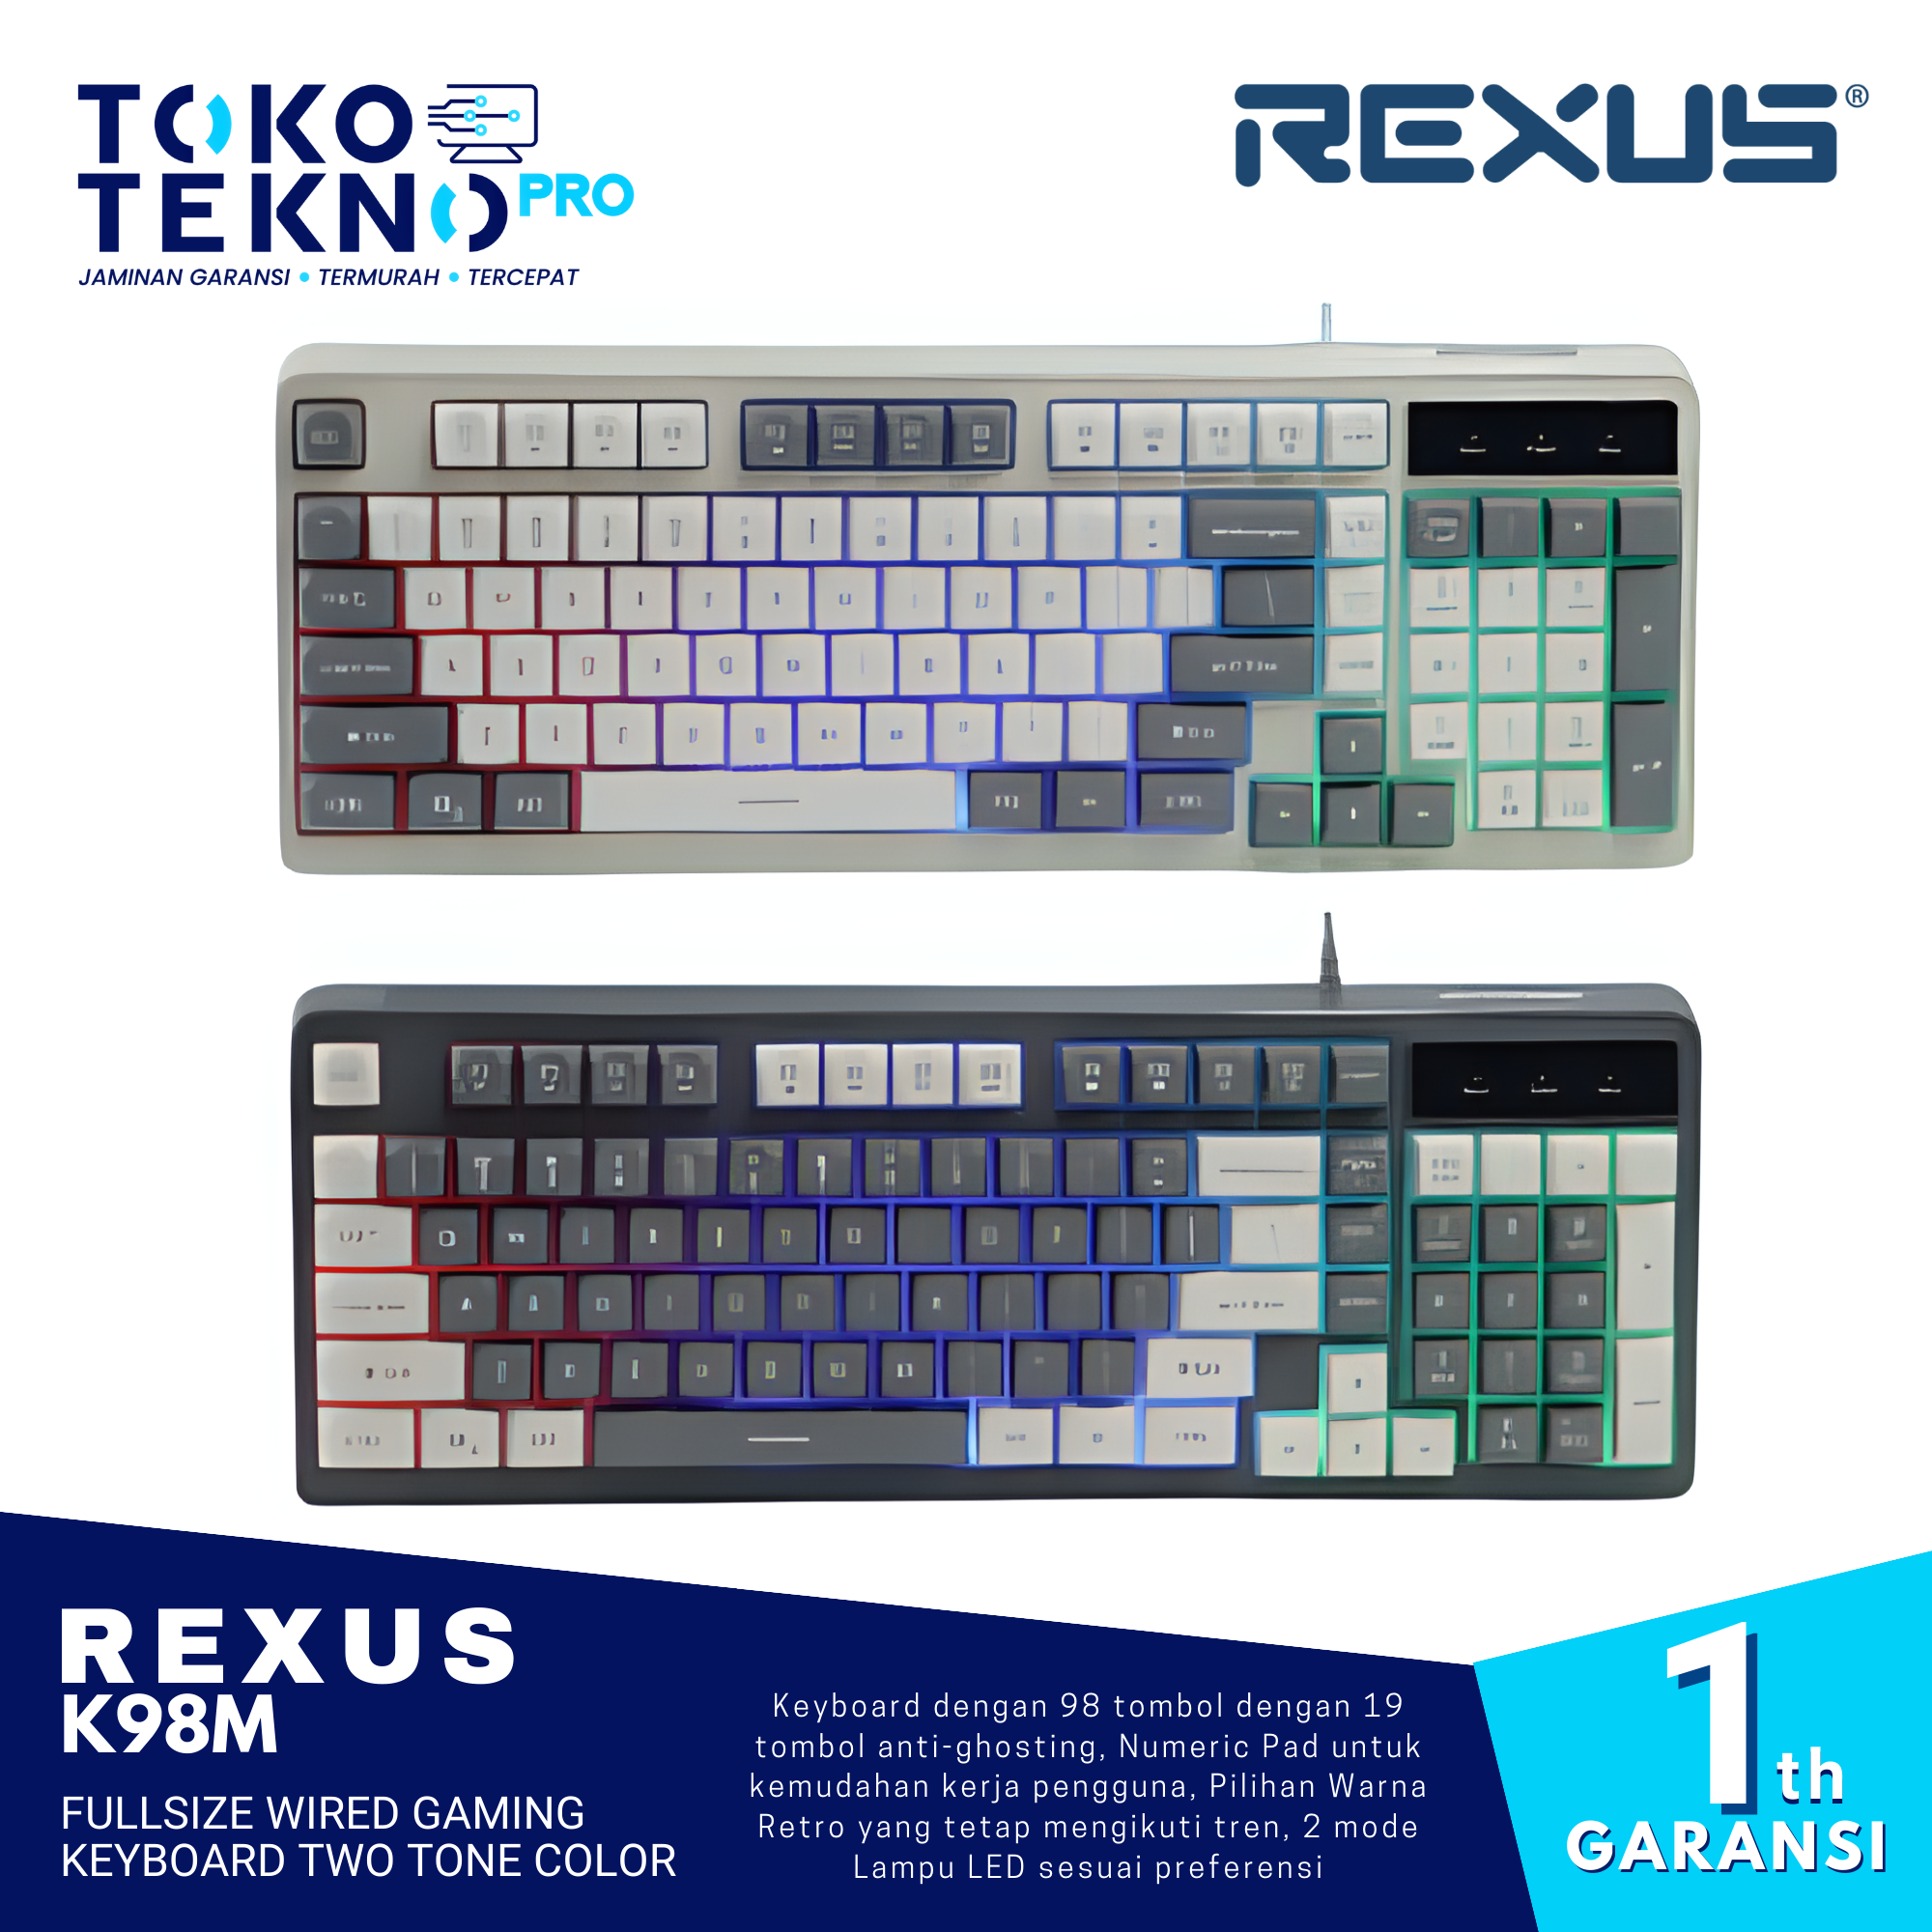 Rexus K98M / K98-M Fullsize Wired Gaming Keyboard Two Tone Color